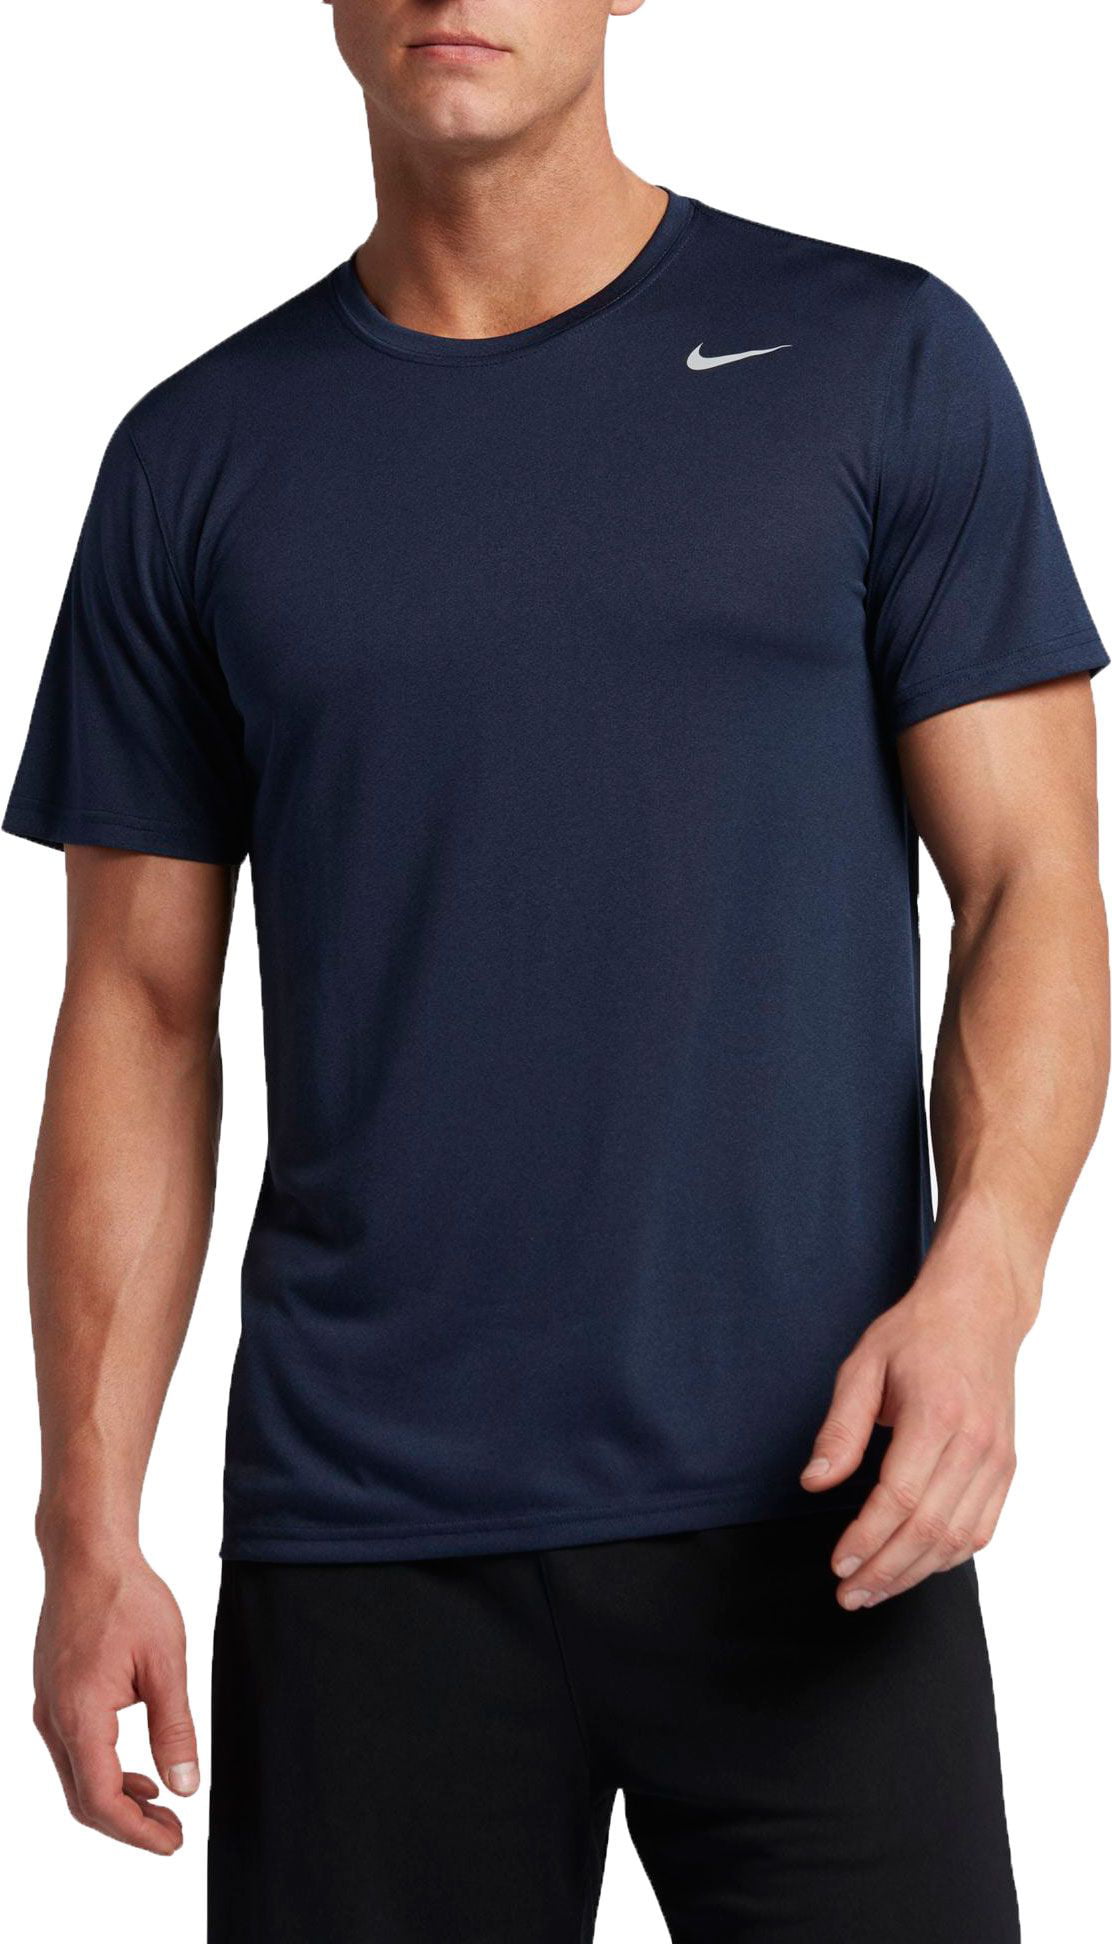 Nike Men's Legend 2.0 T-Shirt - Walmart.com